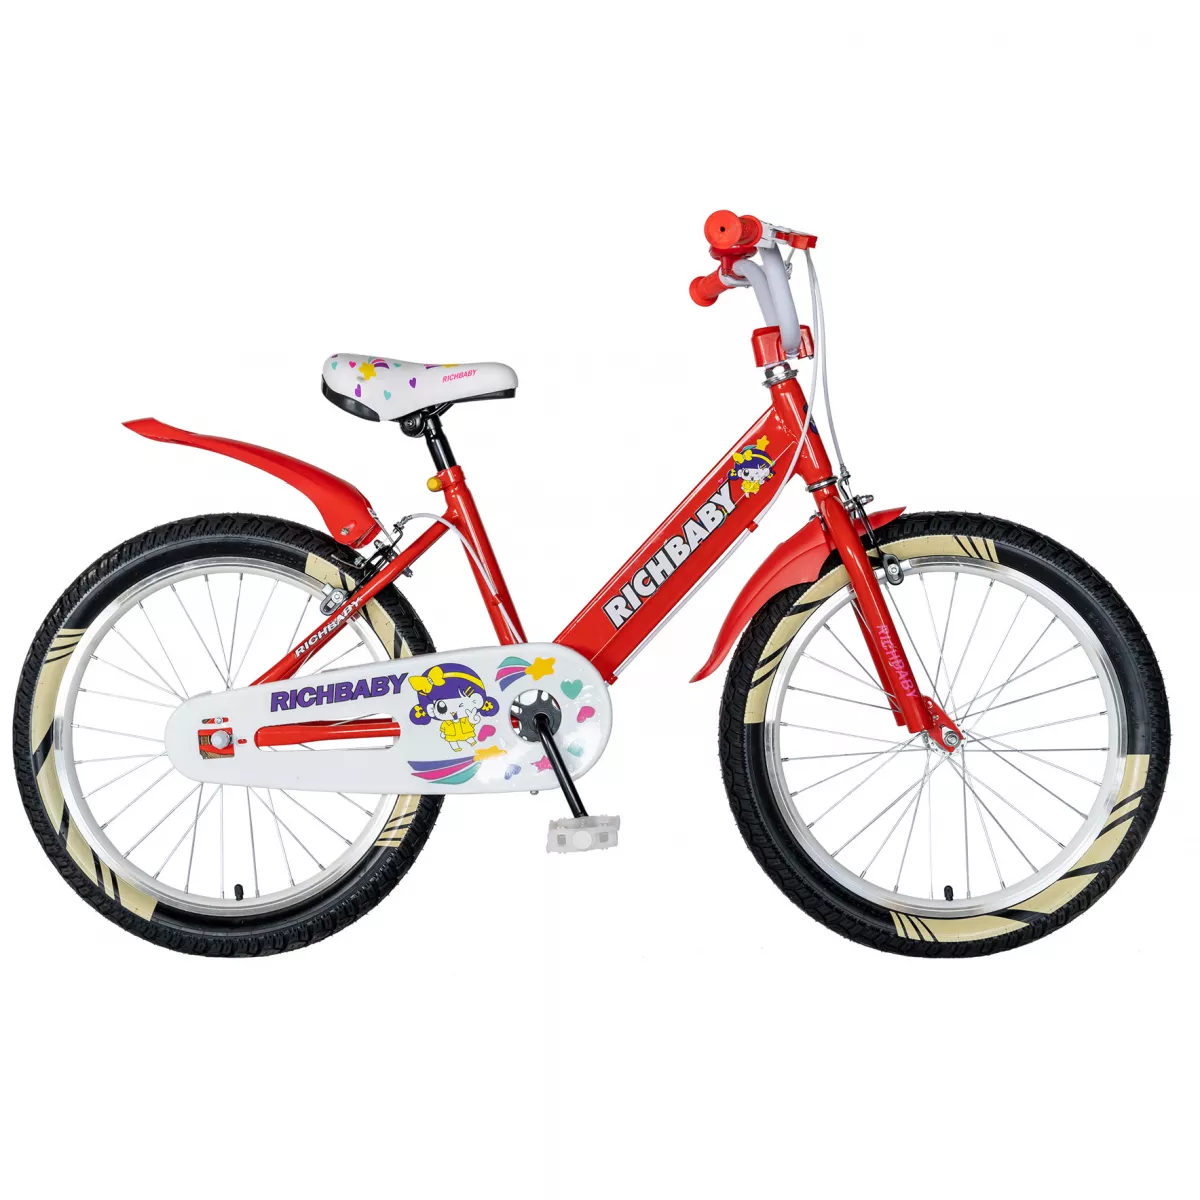 Bicicleta fete 20 inch Rich Baby R2008A, frana C-Brake otel,  culoare rosu/alb, varsta 7-10 ani  